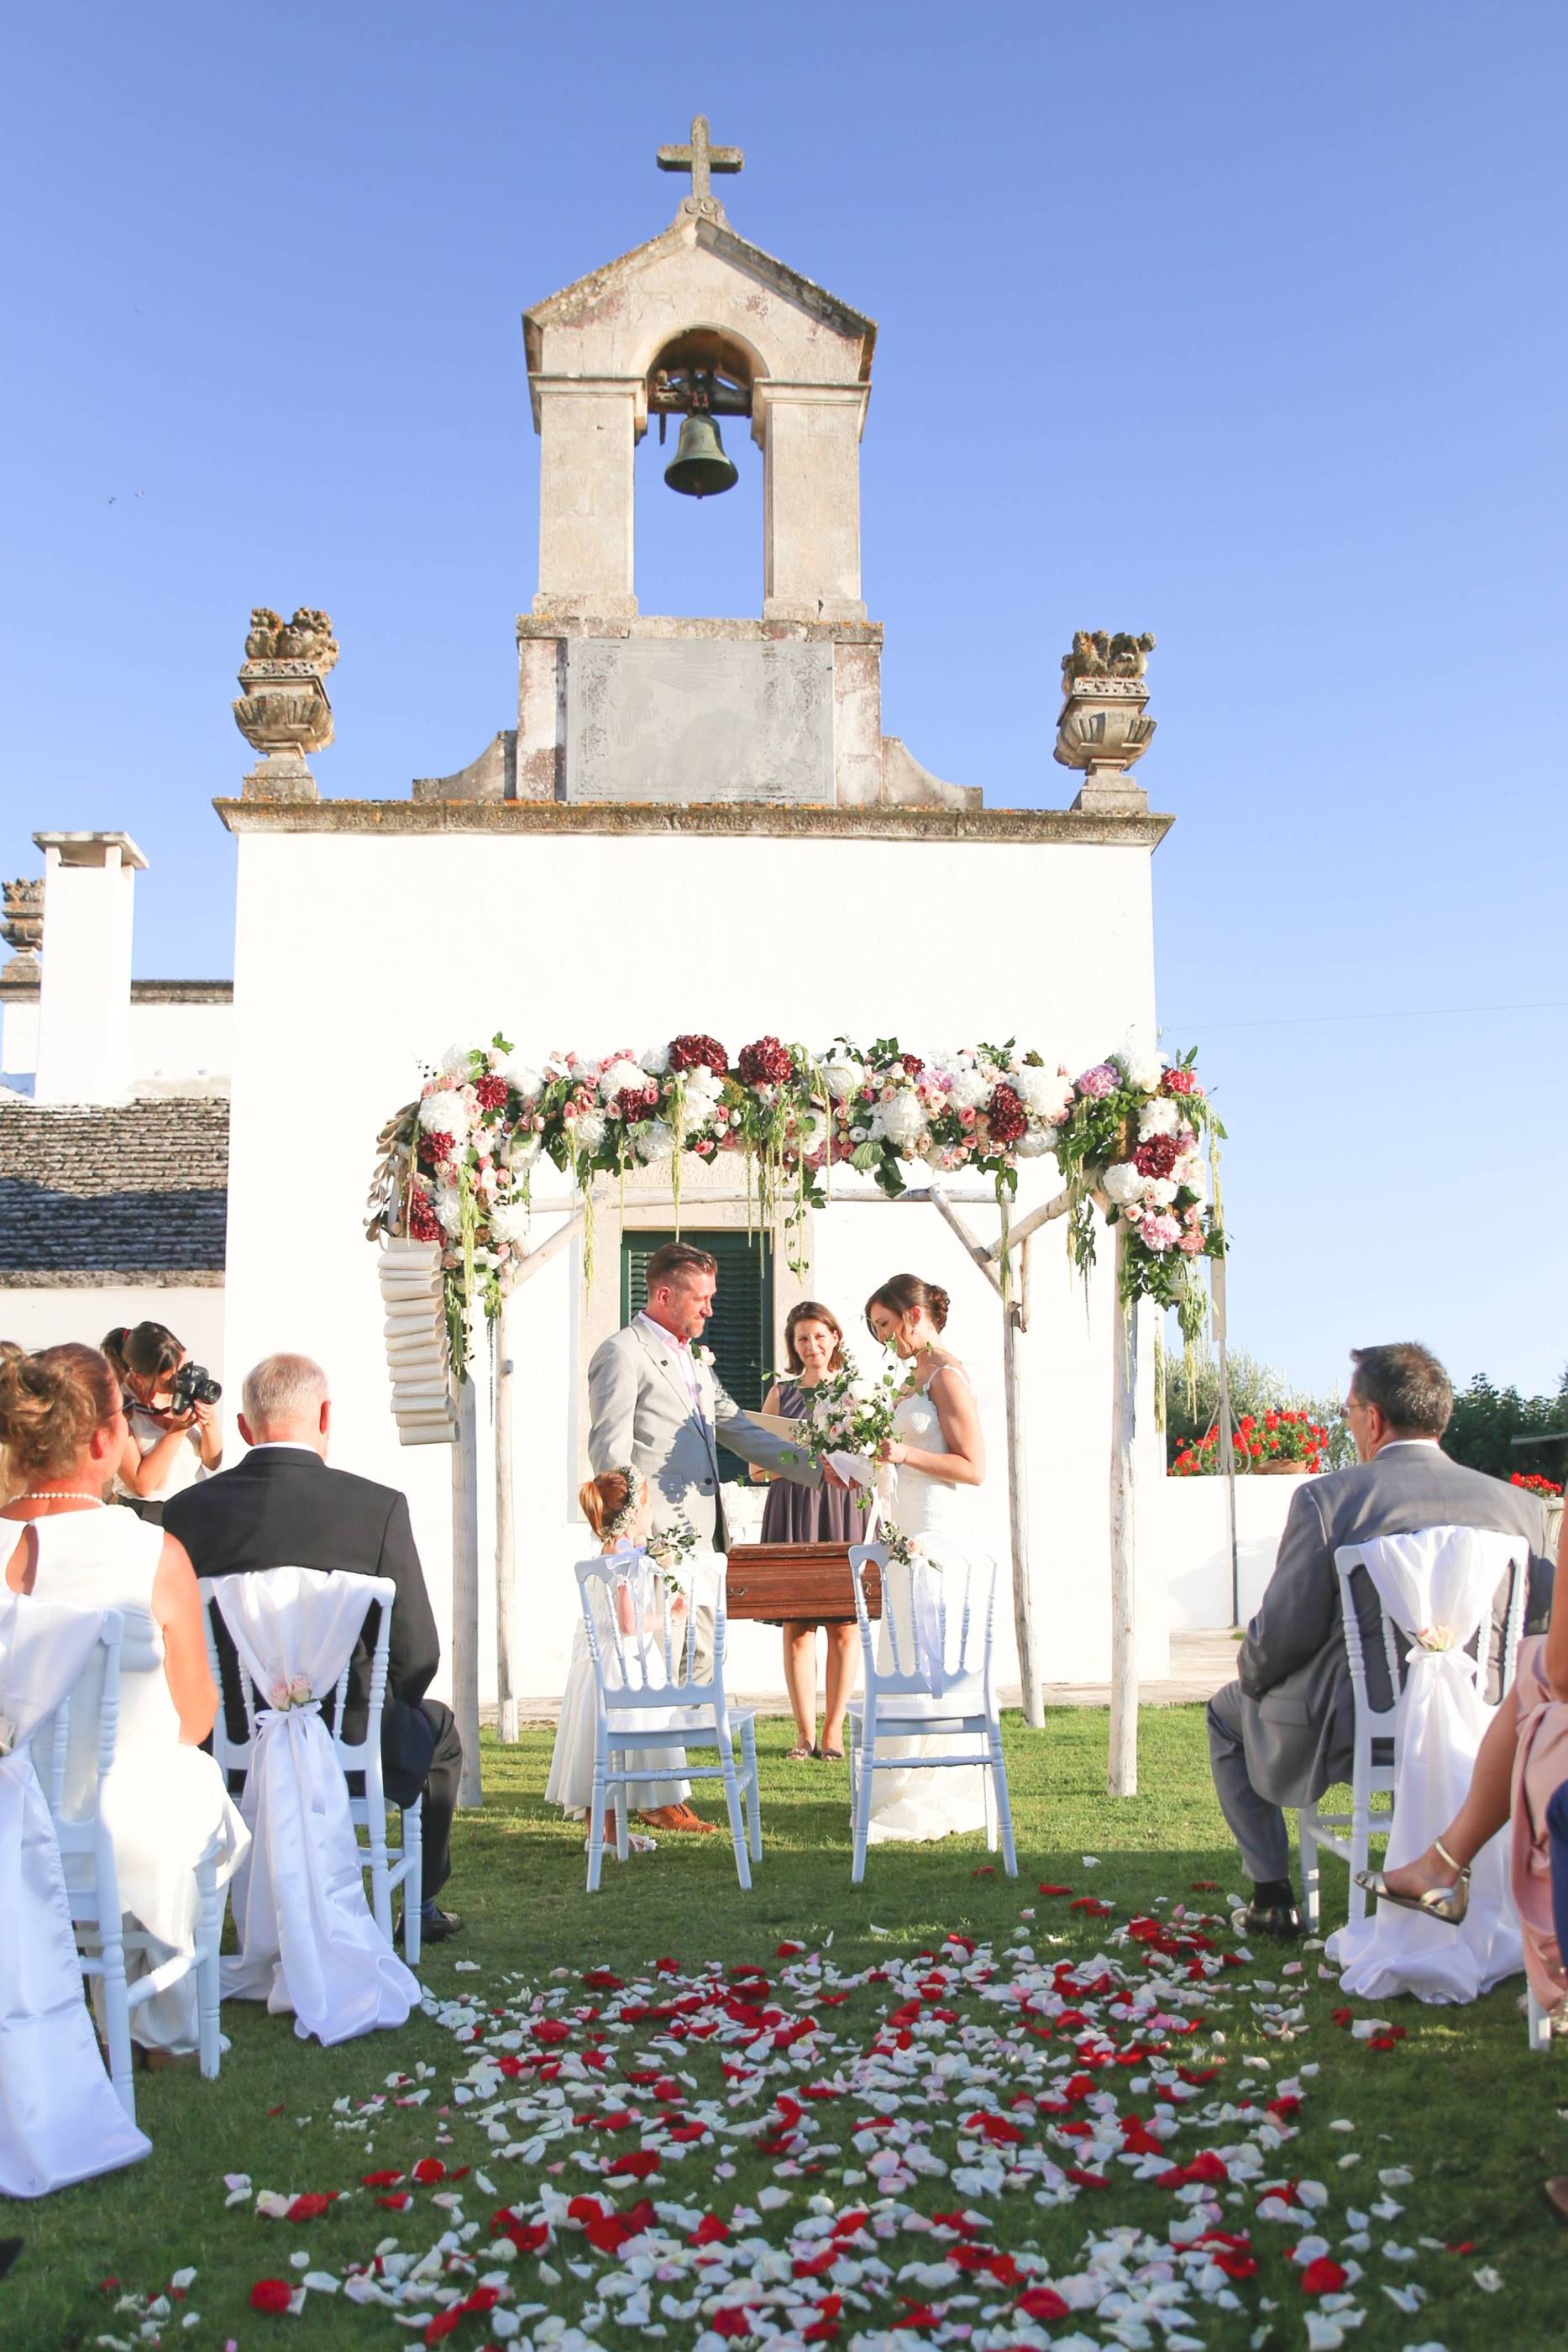 Dean&Sarah Matrimonio Wedding Italy Pulia Puglia MCE Stories Destination Photographer